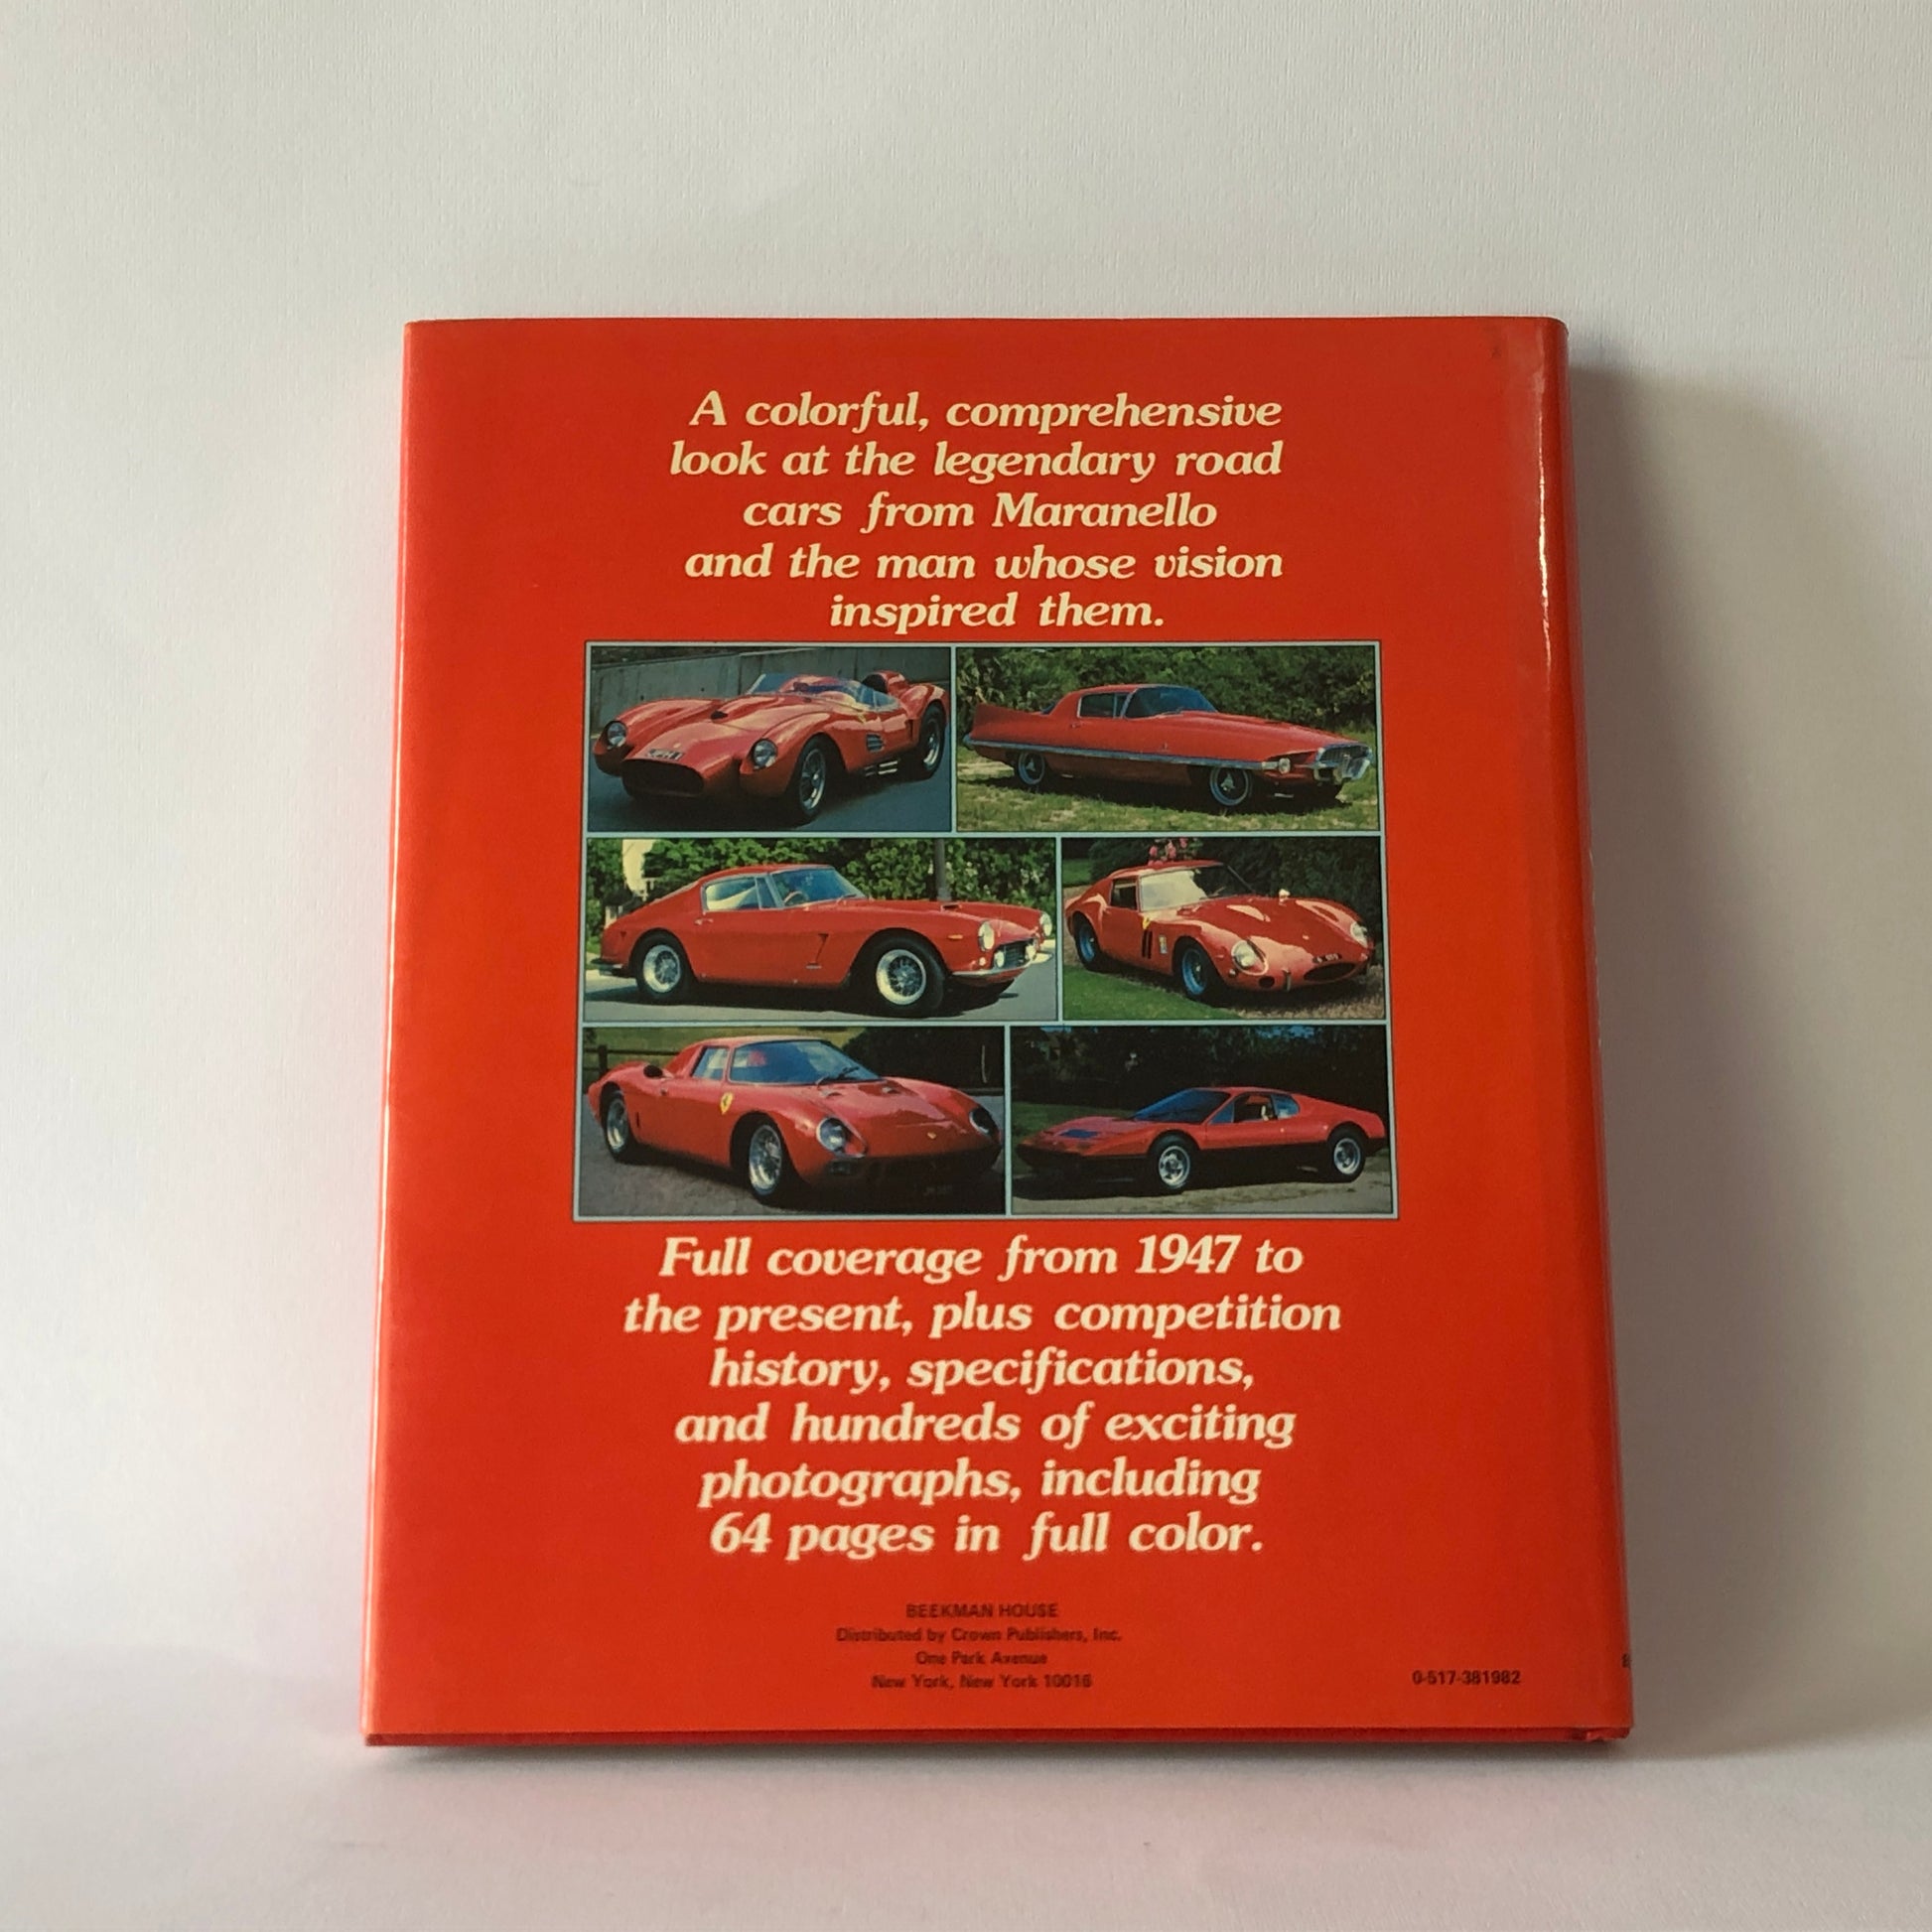 Ferrari, Libro Ferrari The Sports Racing And Road Cars, The Editors of Consumer Guide, ISBN 0517381982 - Raggi's Collectibles' Automotive Art